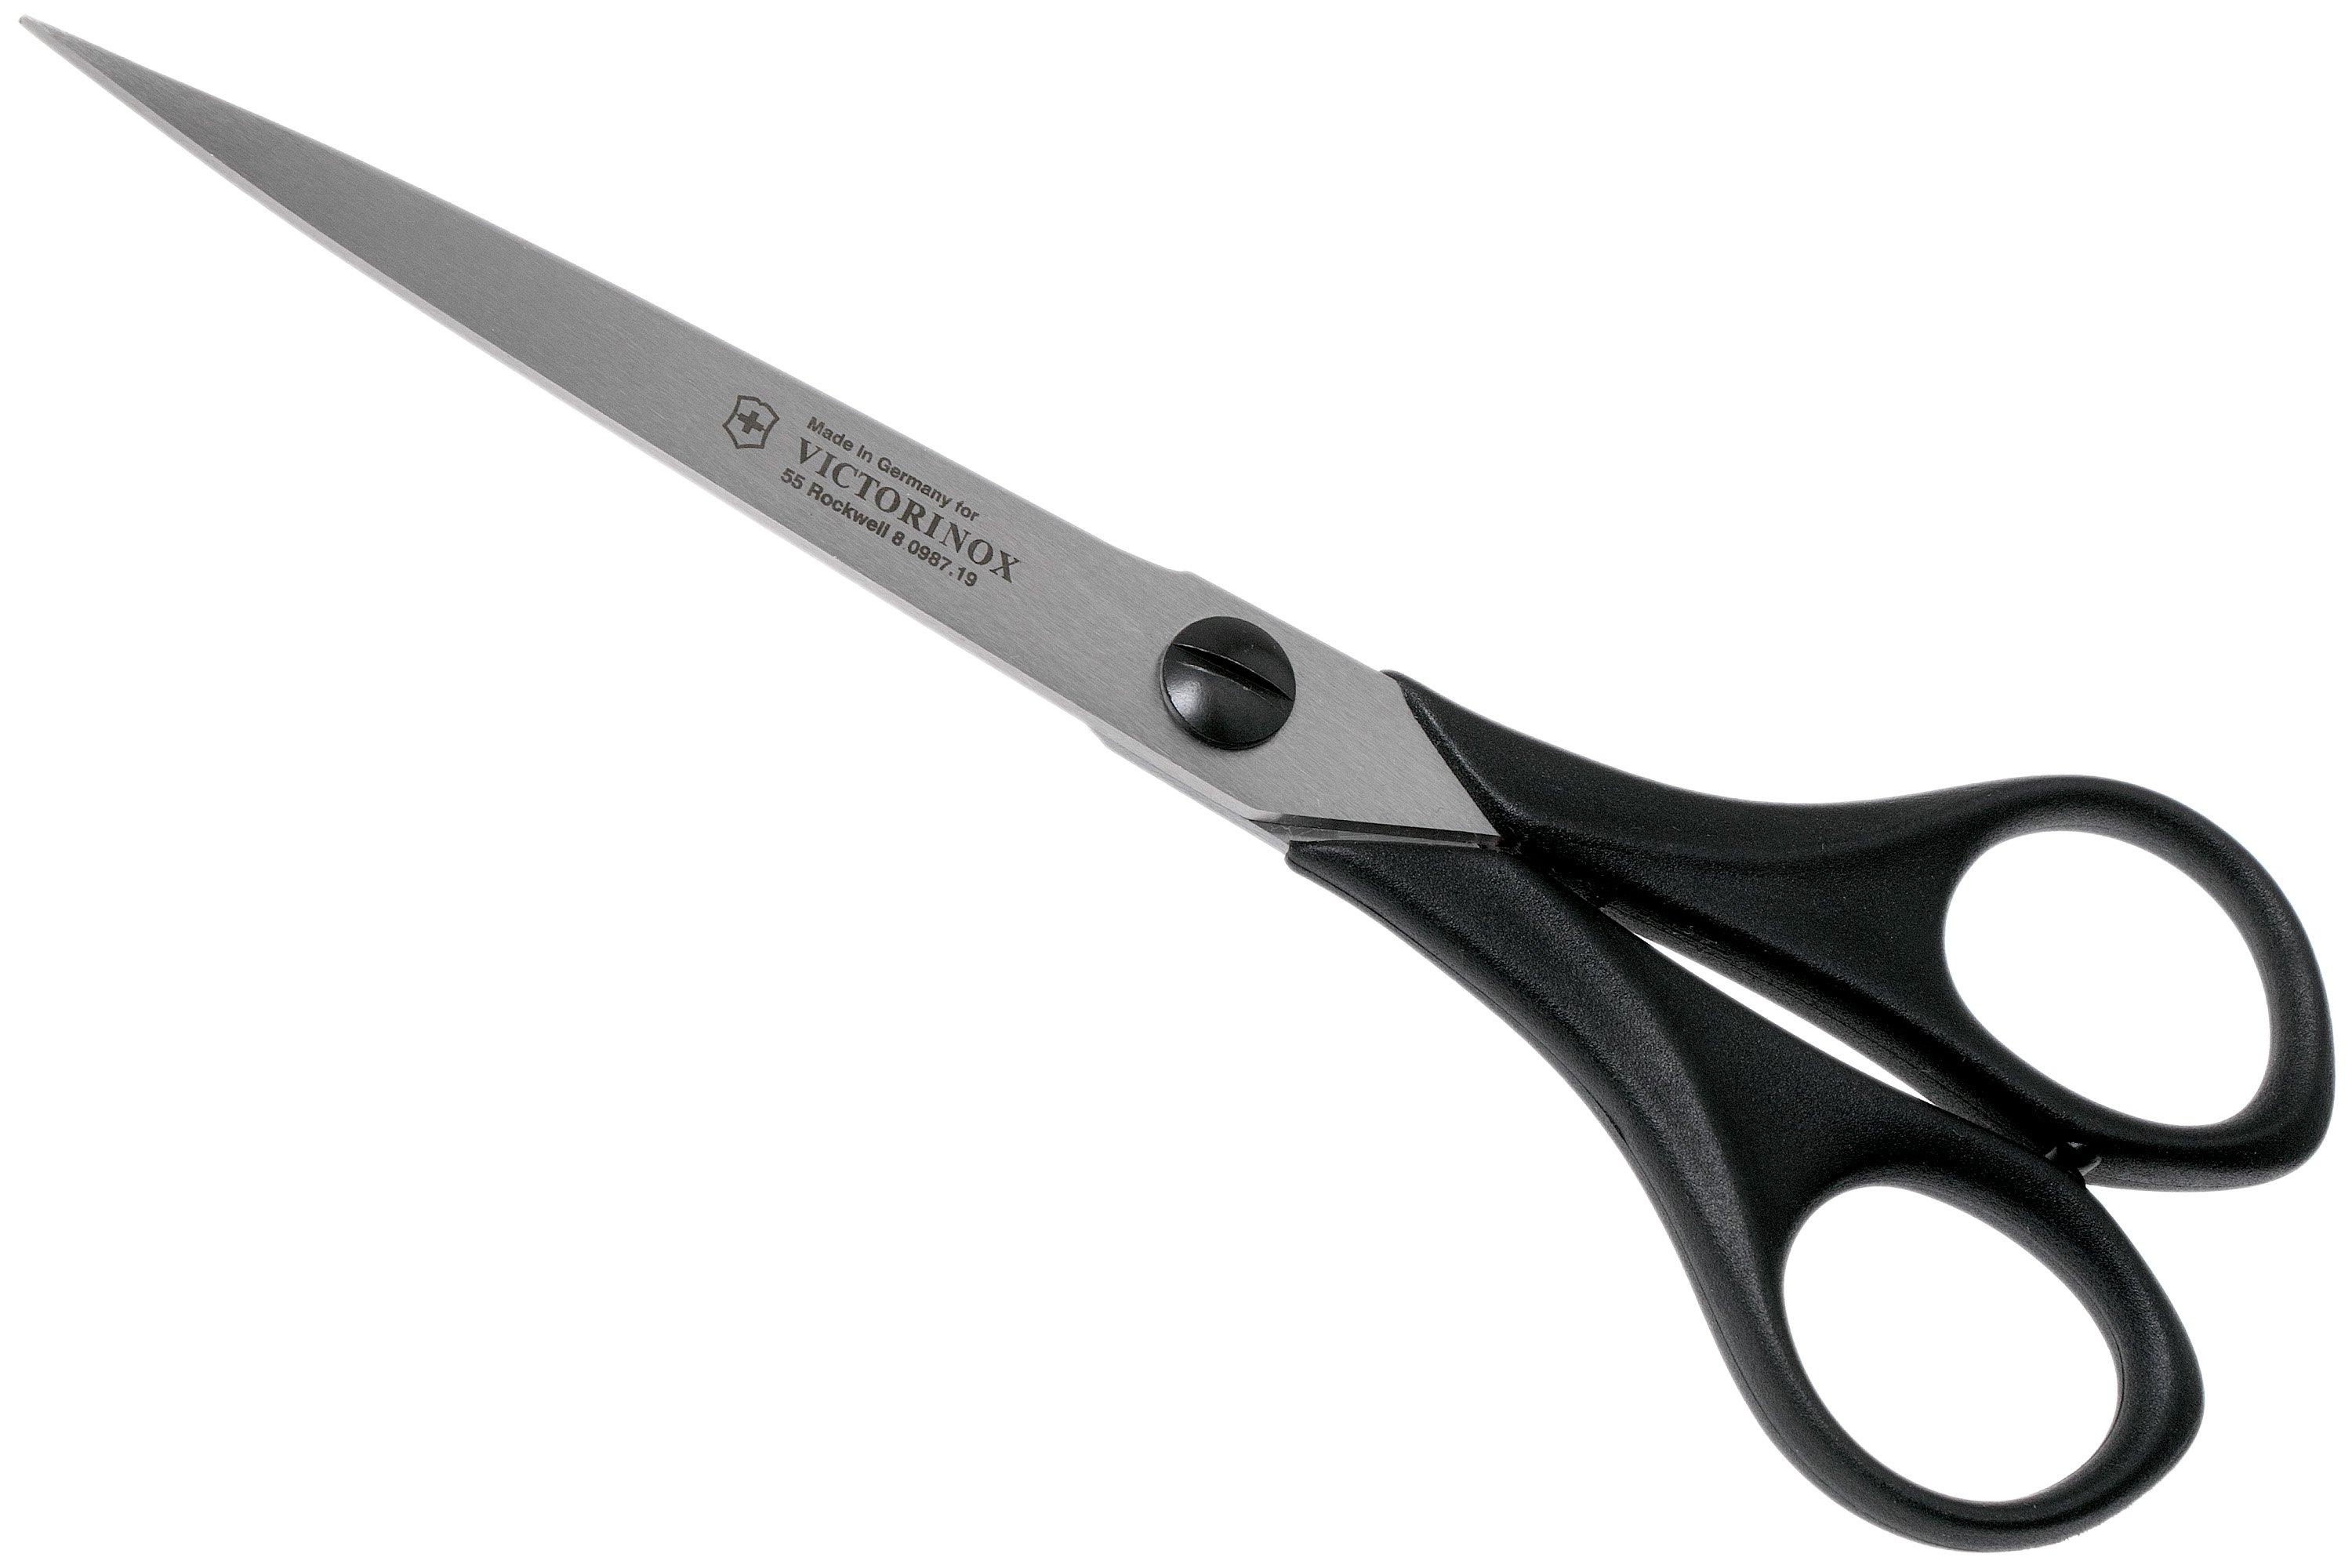 Victorinox 8.0987.19 household scissors 18 cm | Advantageously shopping at